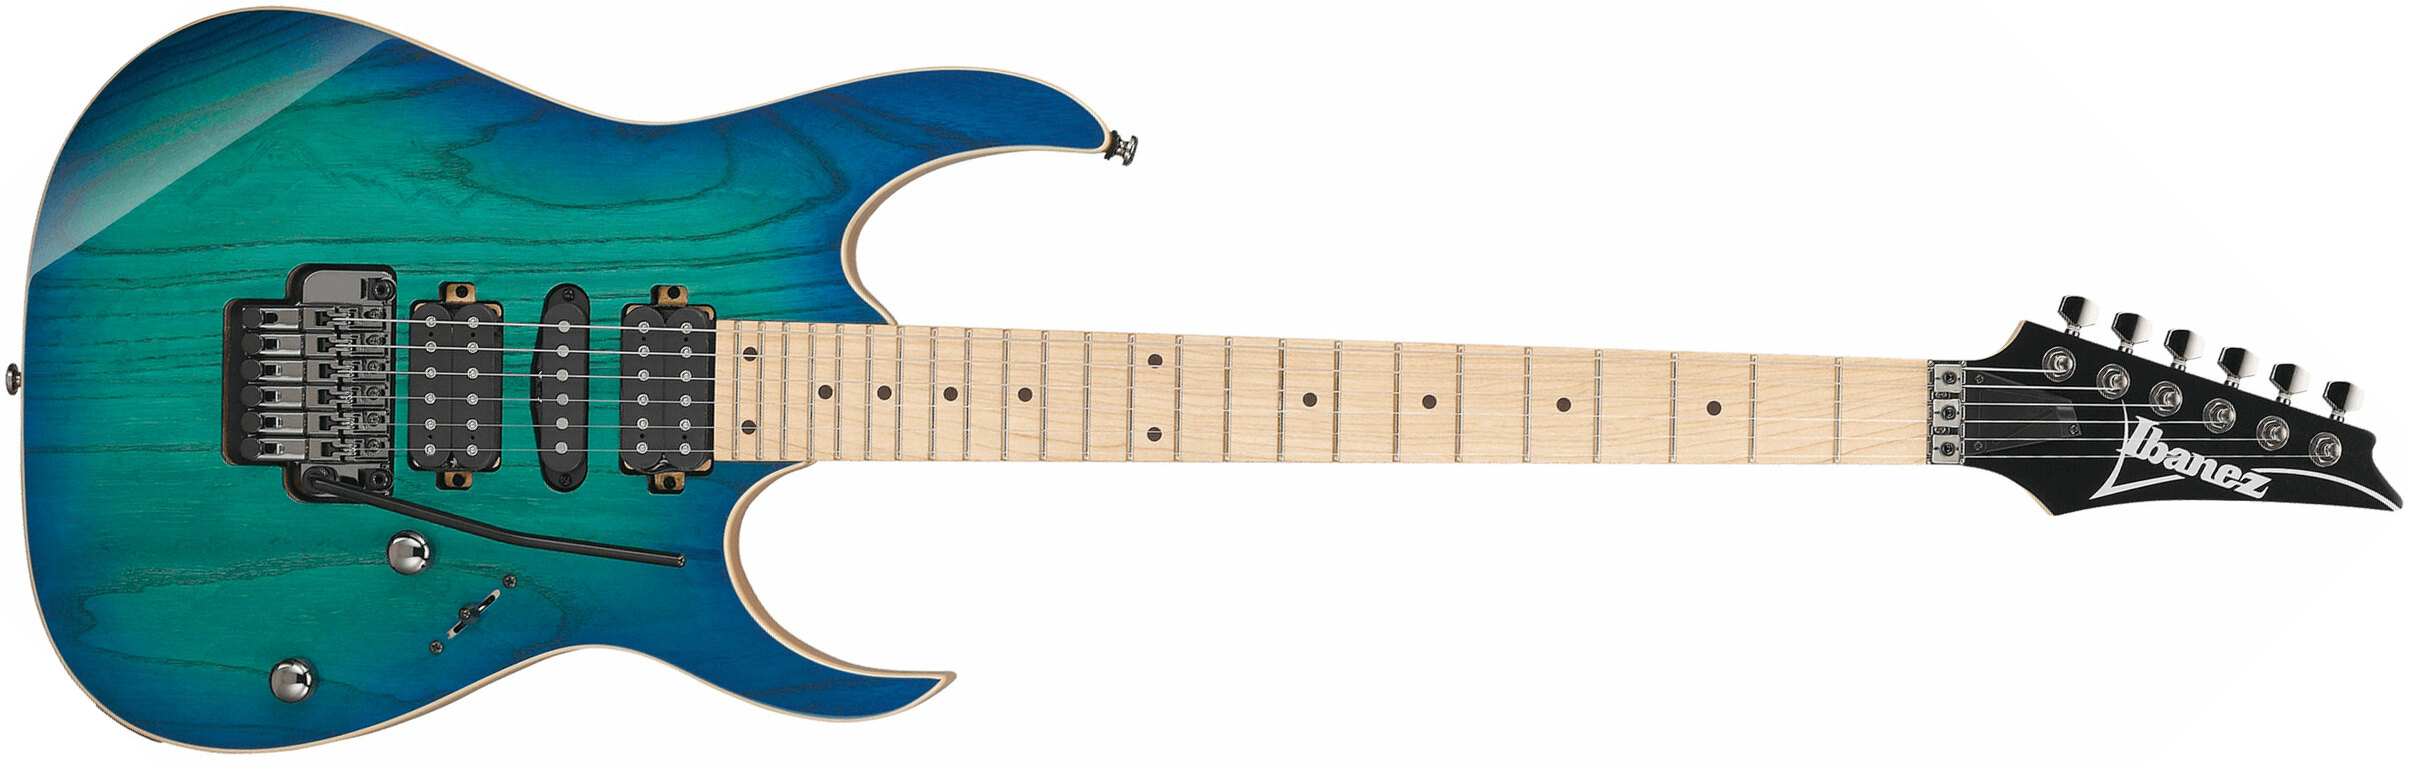 Ibanez Rg470ahm Bmt Standard Hsh Fr Mn - Blue Moon Burst - Str shape electric guitar - Main picture